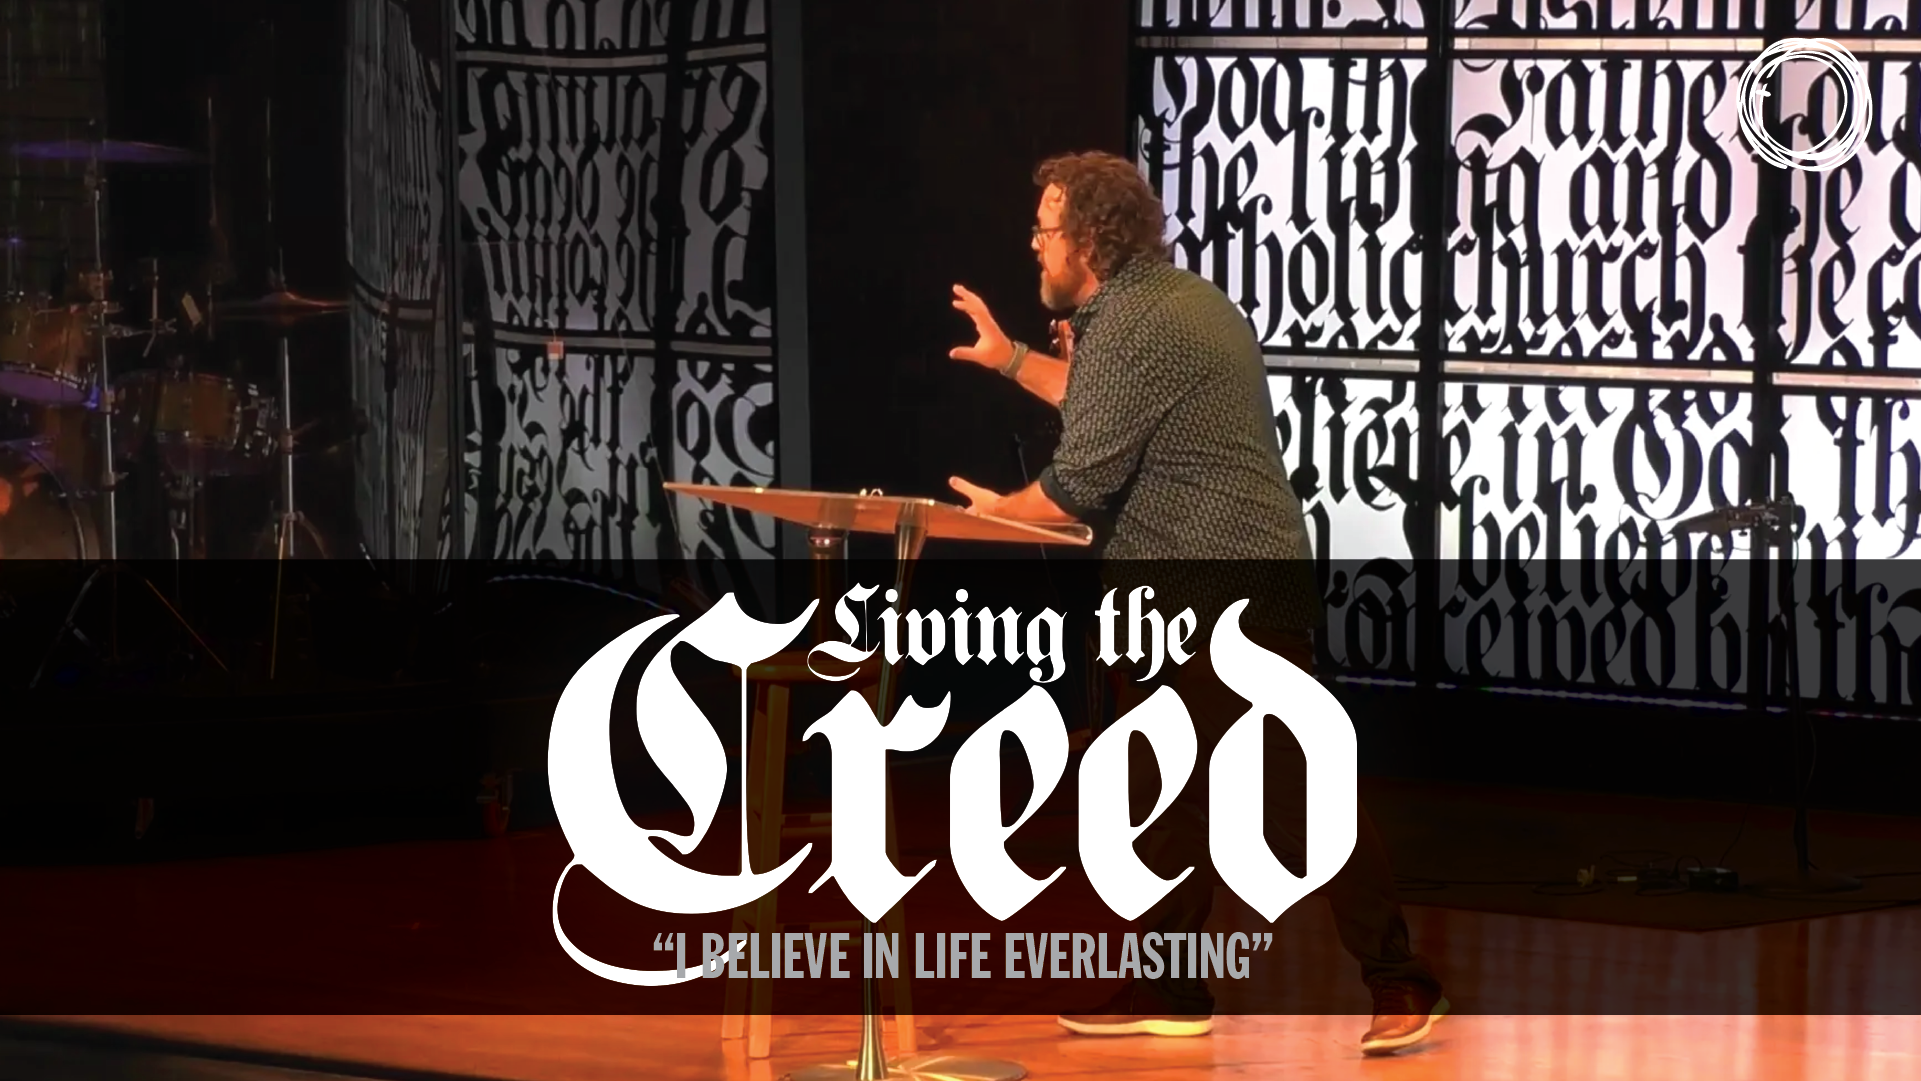 "I believe in life everlasting."